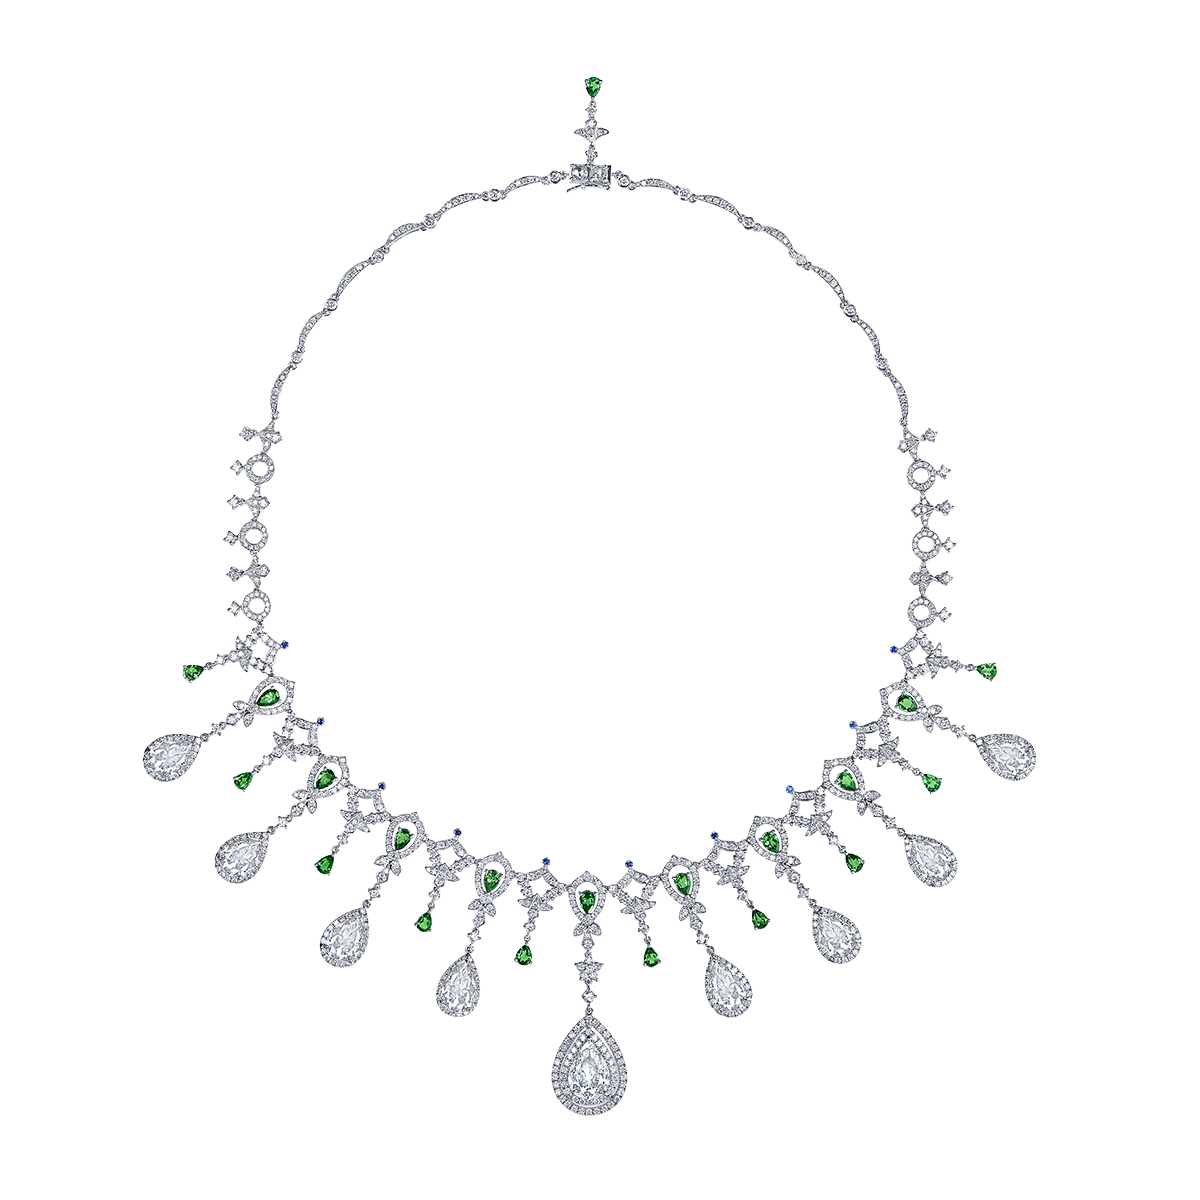 白鑽彩寶鑽石套鍊
Diamond and Multi-Colored 
Gemstone Necklace